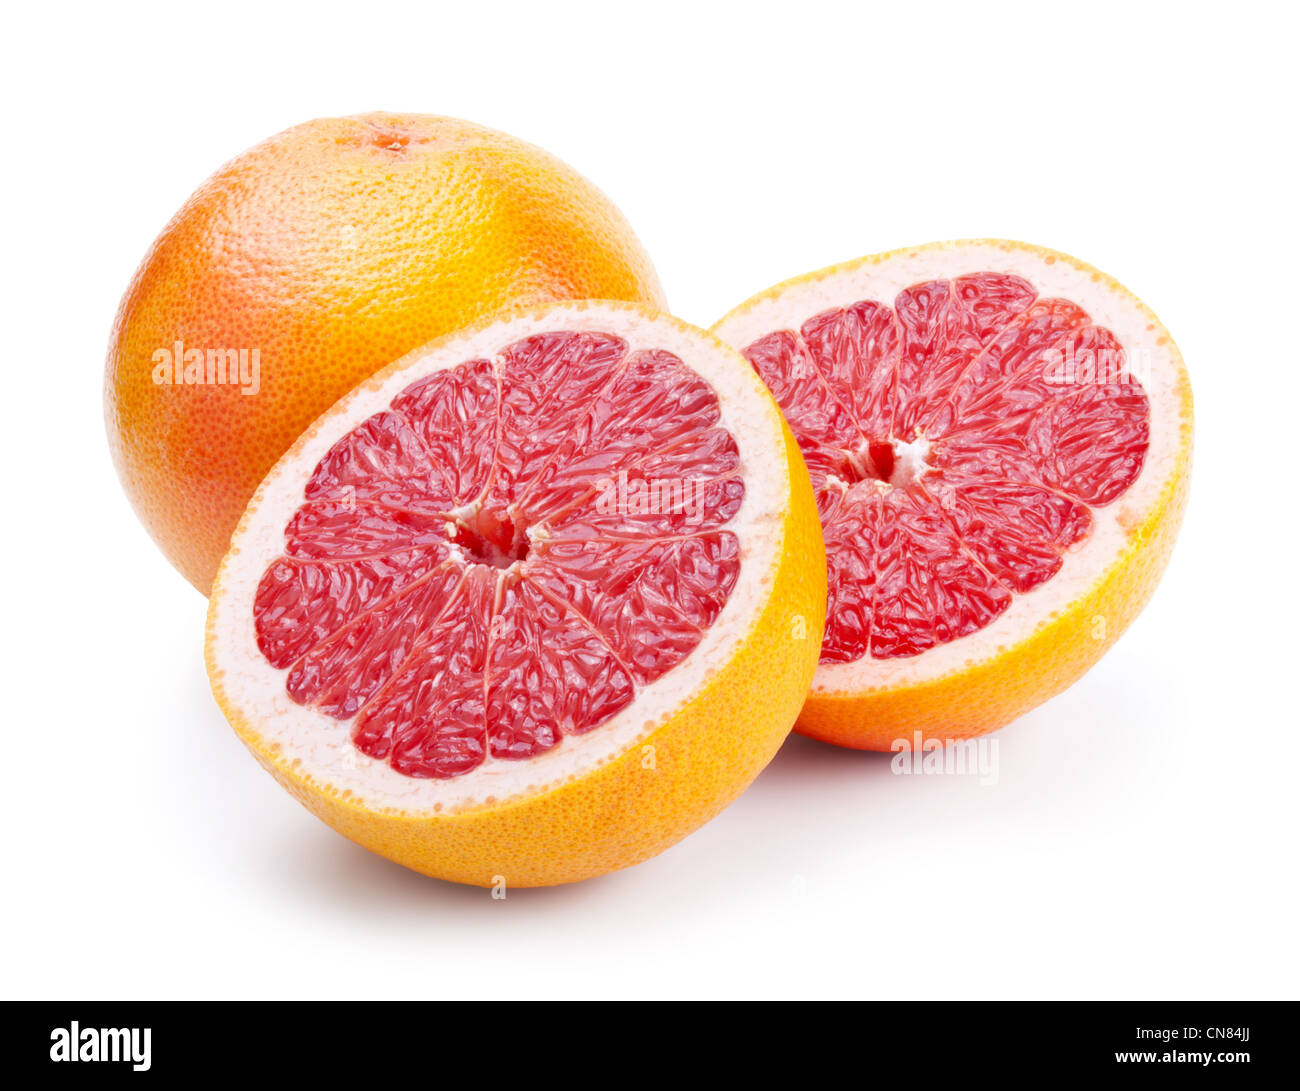 grapefruit with slices isolated on white background Stock Photo